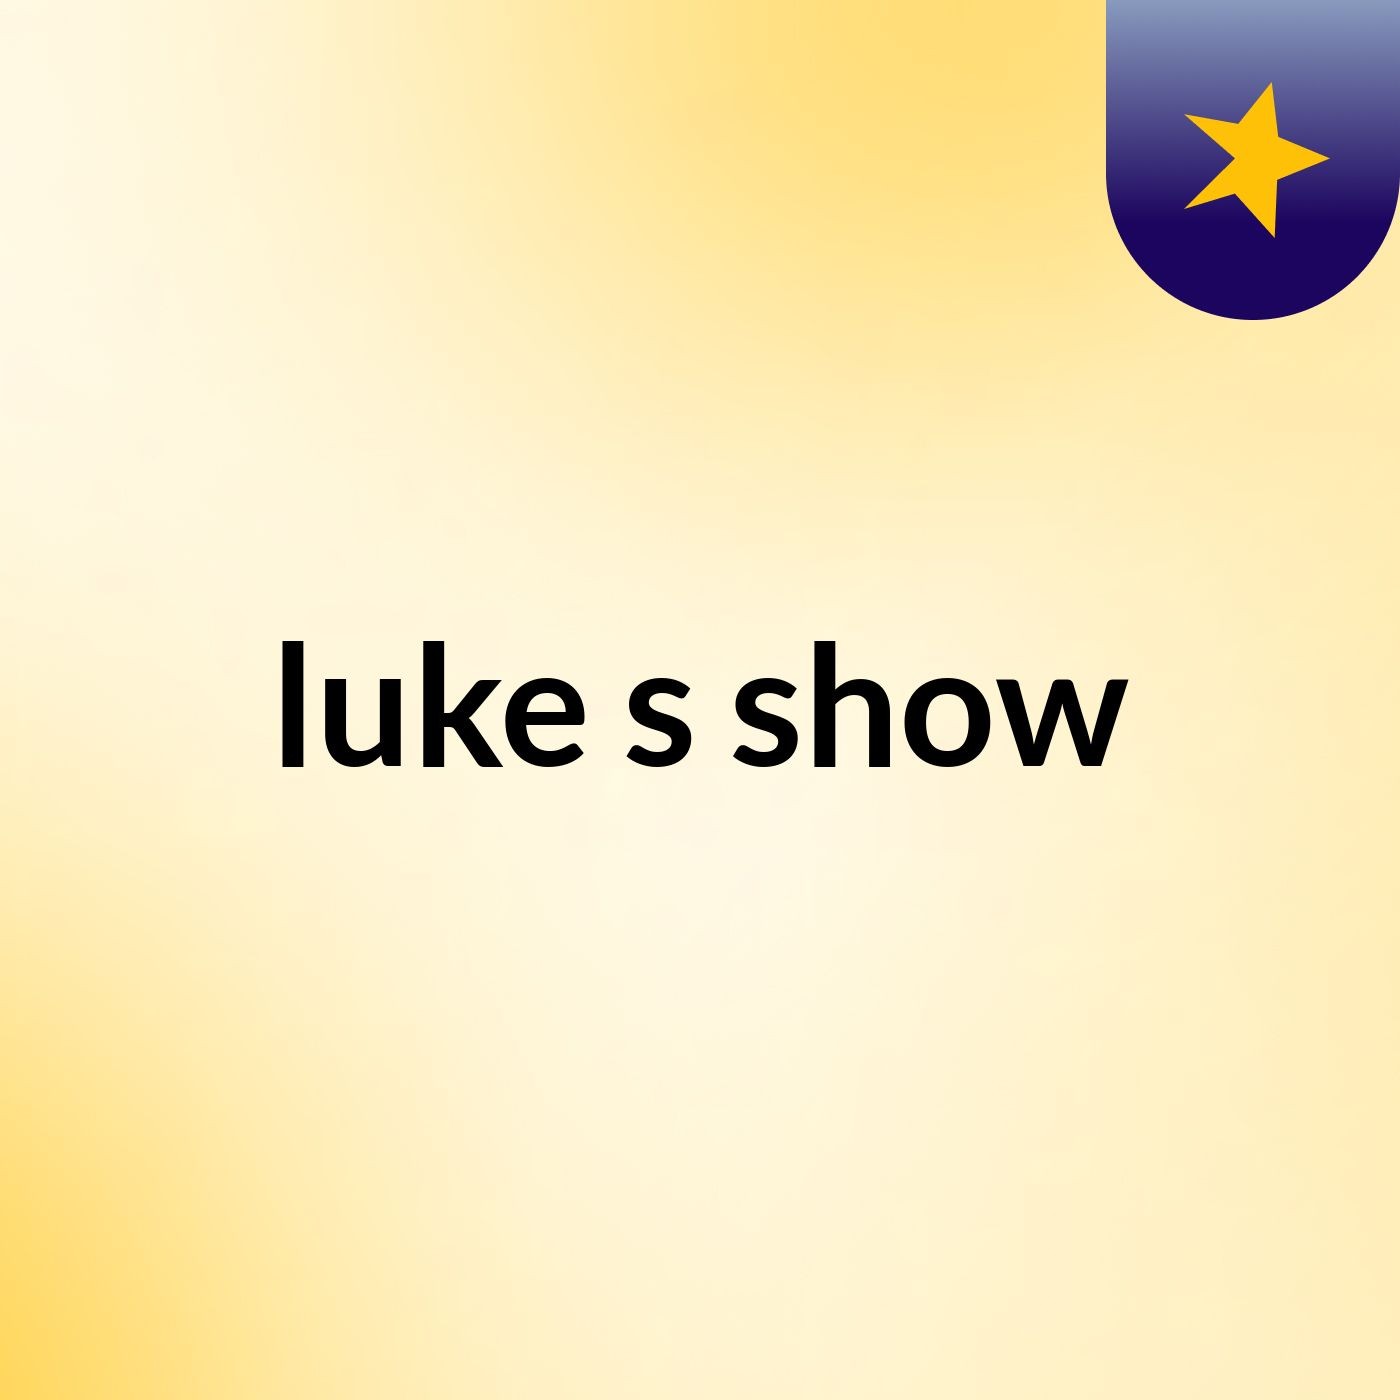 luke's show